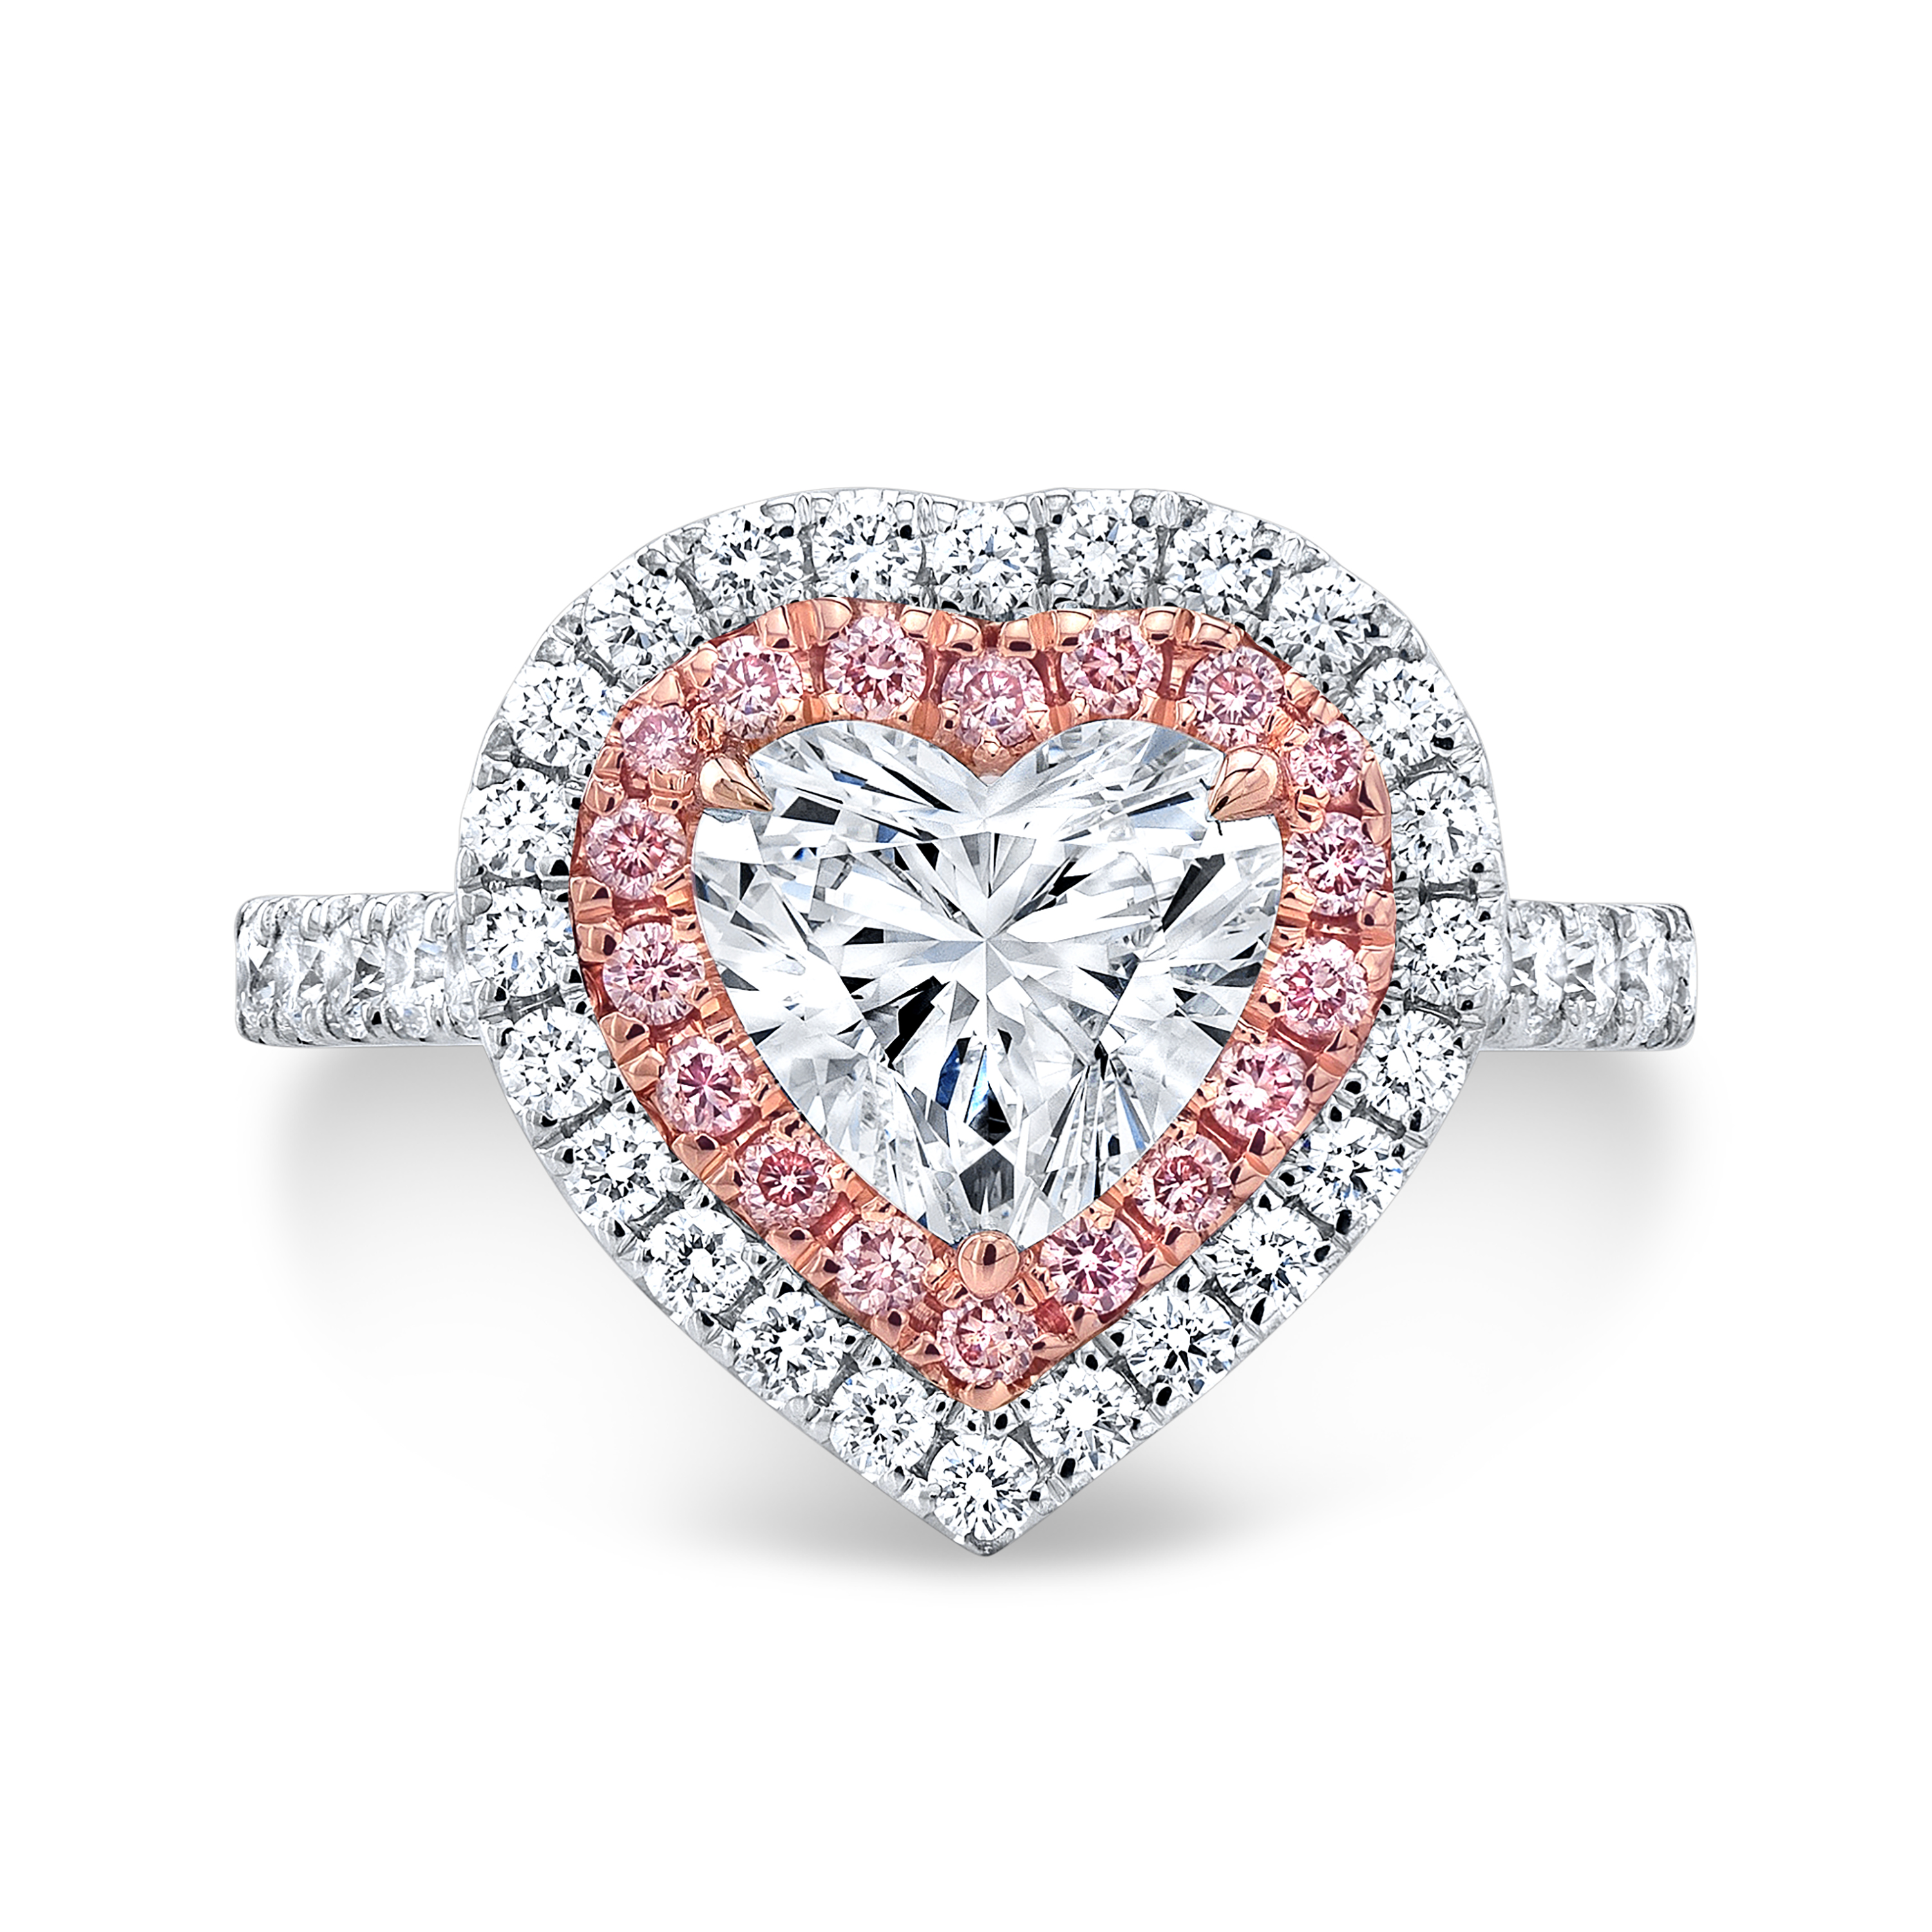 Profeet elke keer vergeven 1.7 Ct. heart Shape Natural Diamond Double Halo Heart w/ Pink Diamonds  Engagement Ring (GIA Certified)